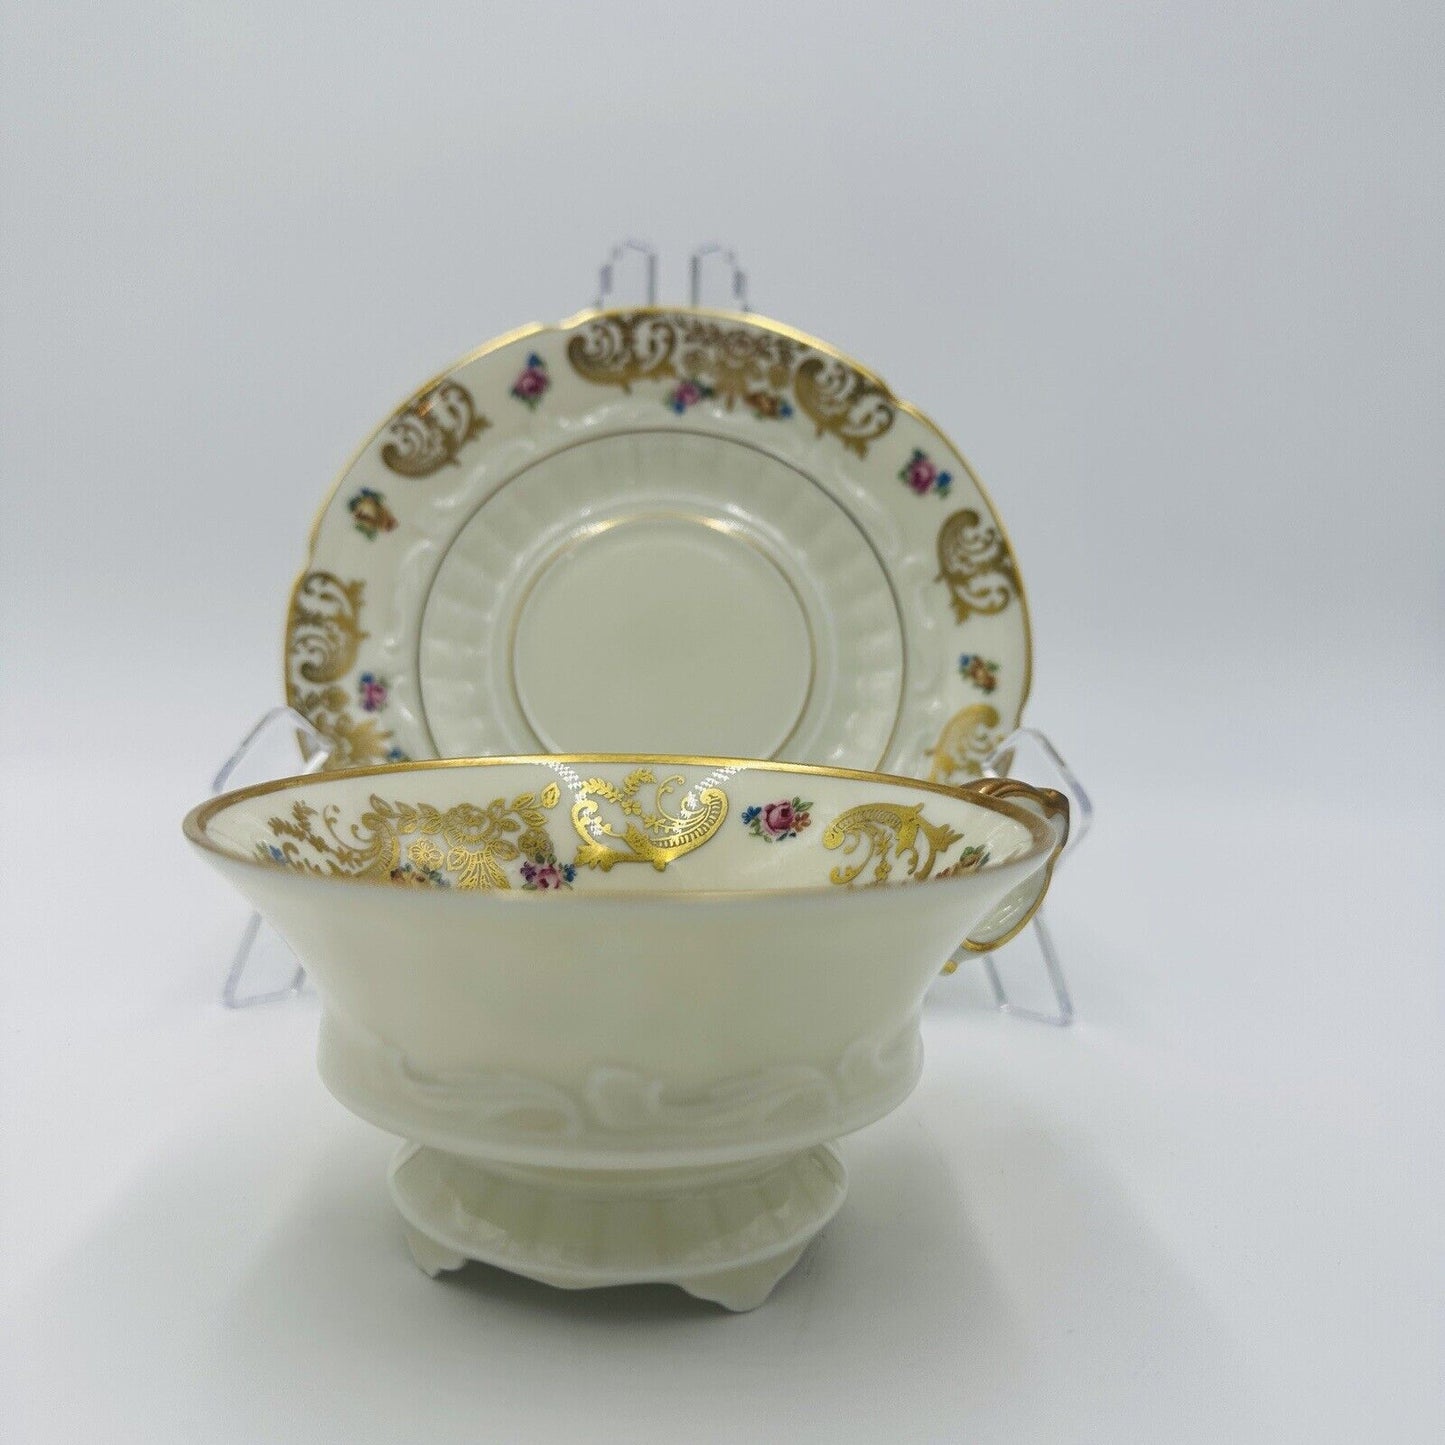 Hertel-Jacob Rehau Teacup Saucer Bavaria Porcelain 9624 Floral Gold Trim German